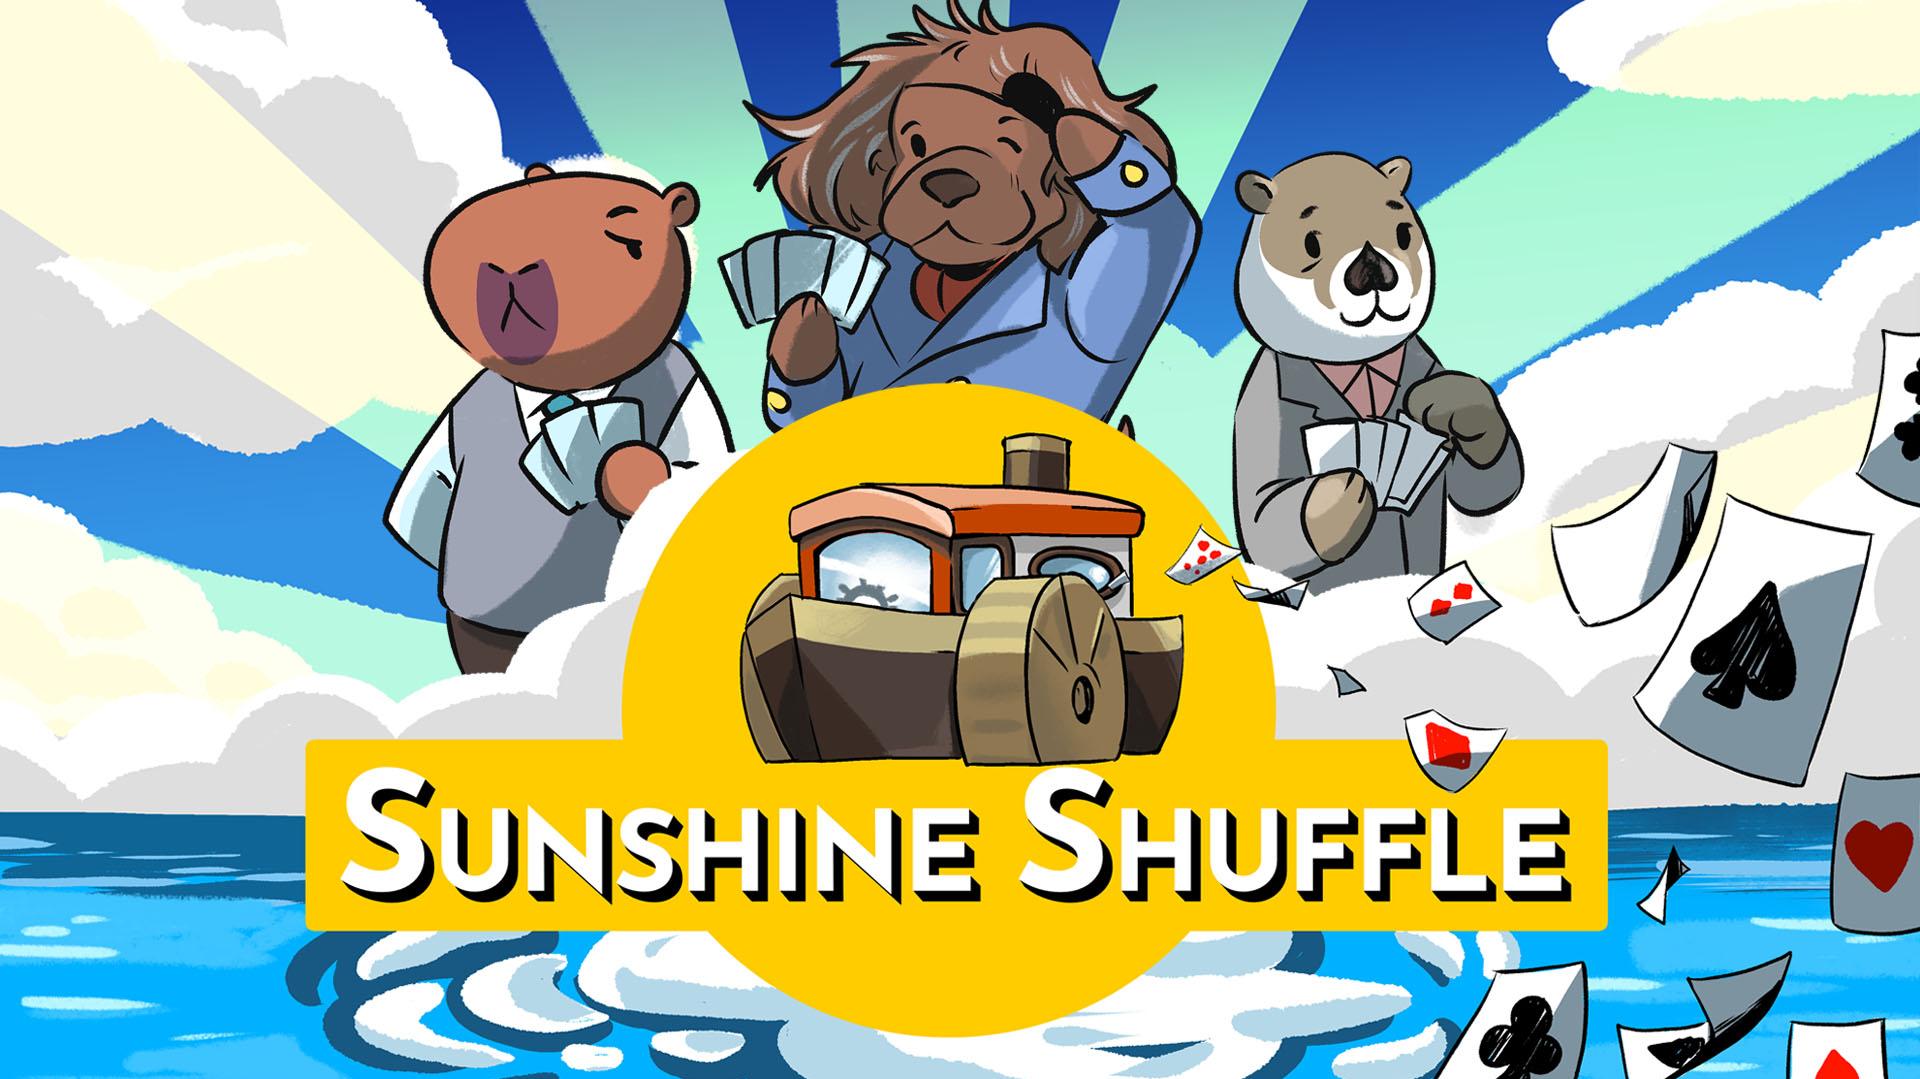 Niche Gamer on Narrative furry poker adventure Sunshine